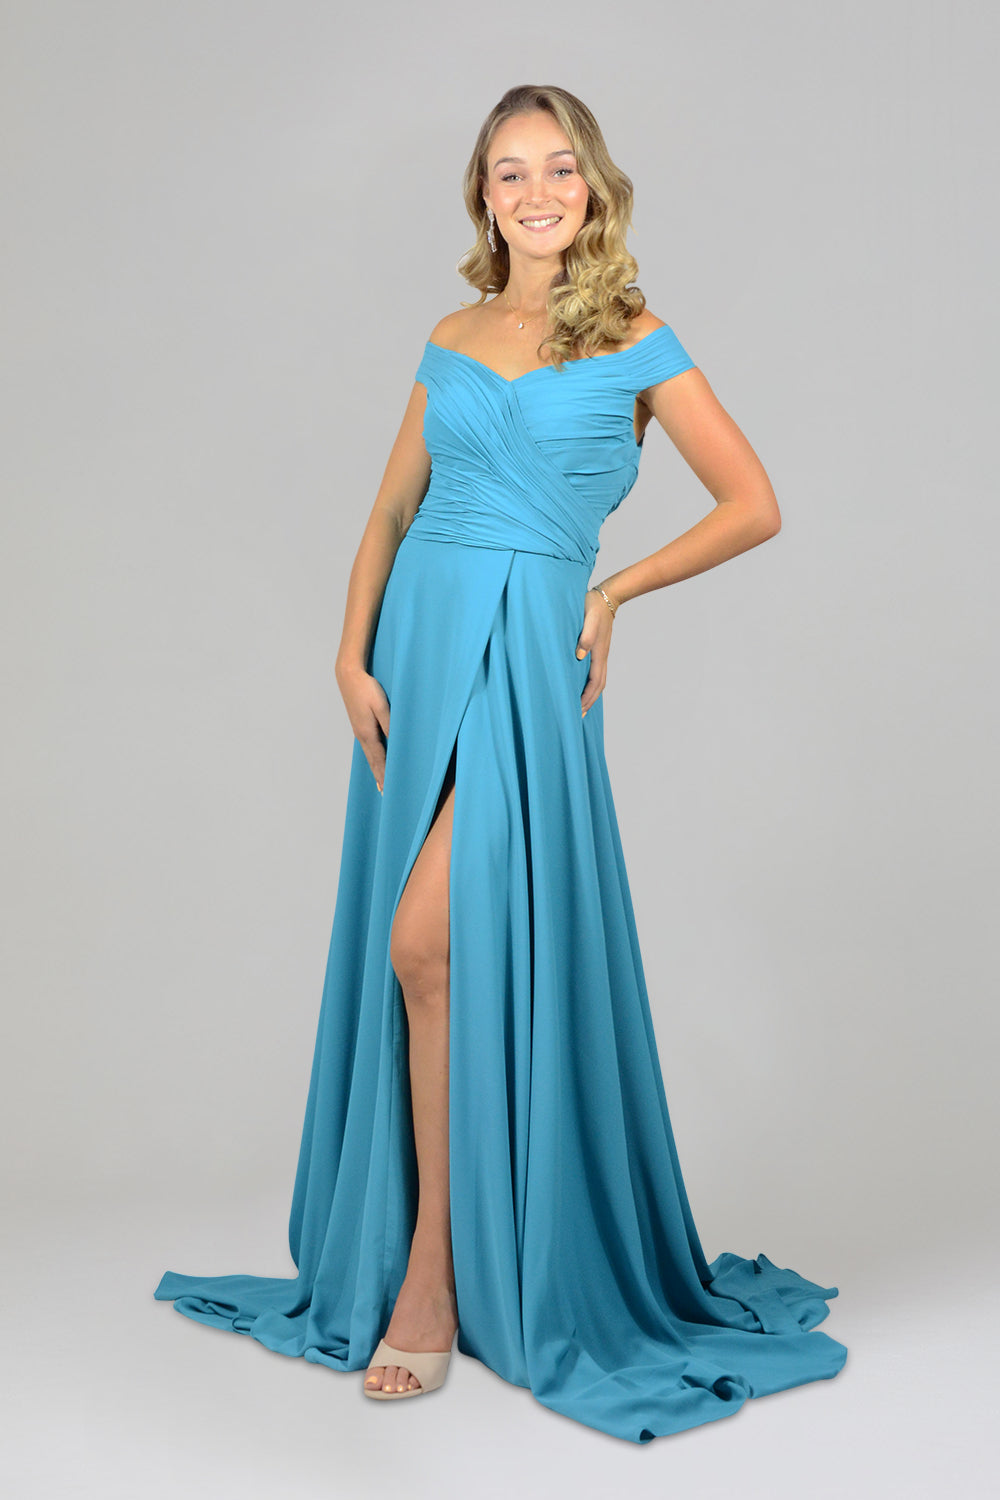 made to order blue bridesmaid dresses perth australia envious bridal & formal